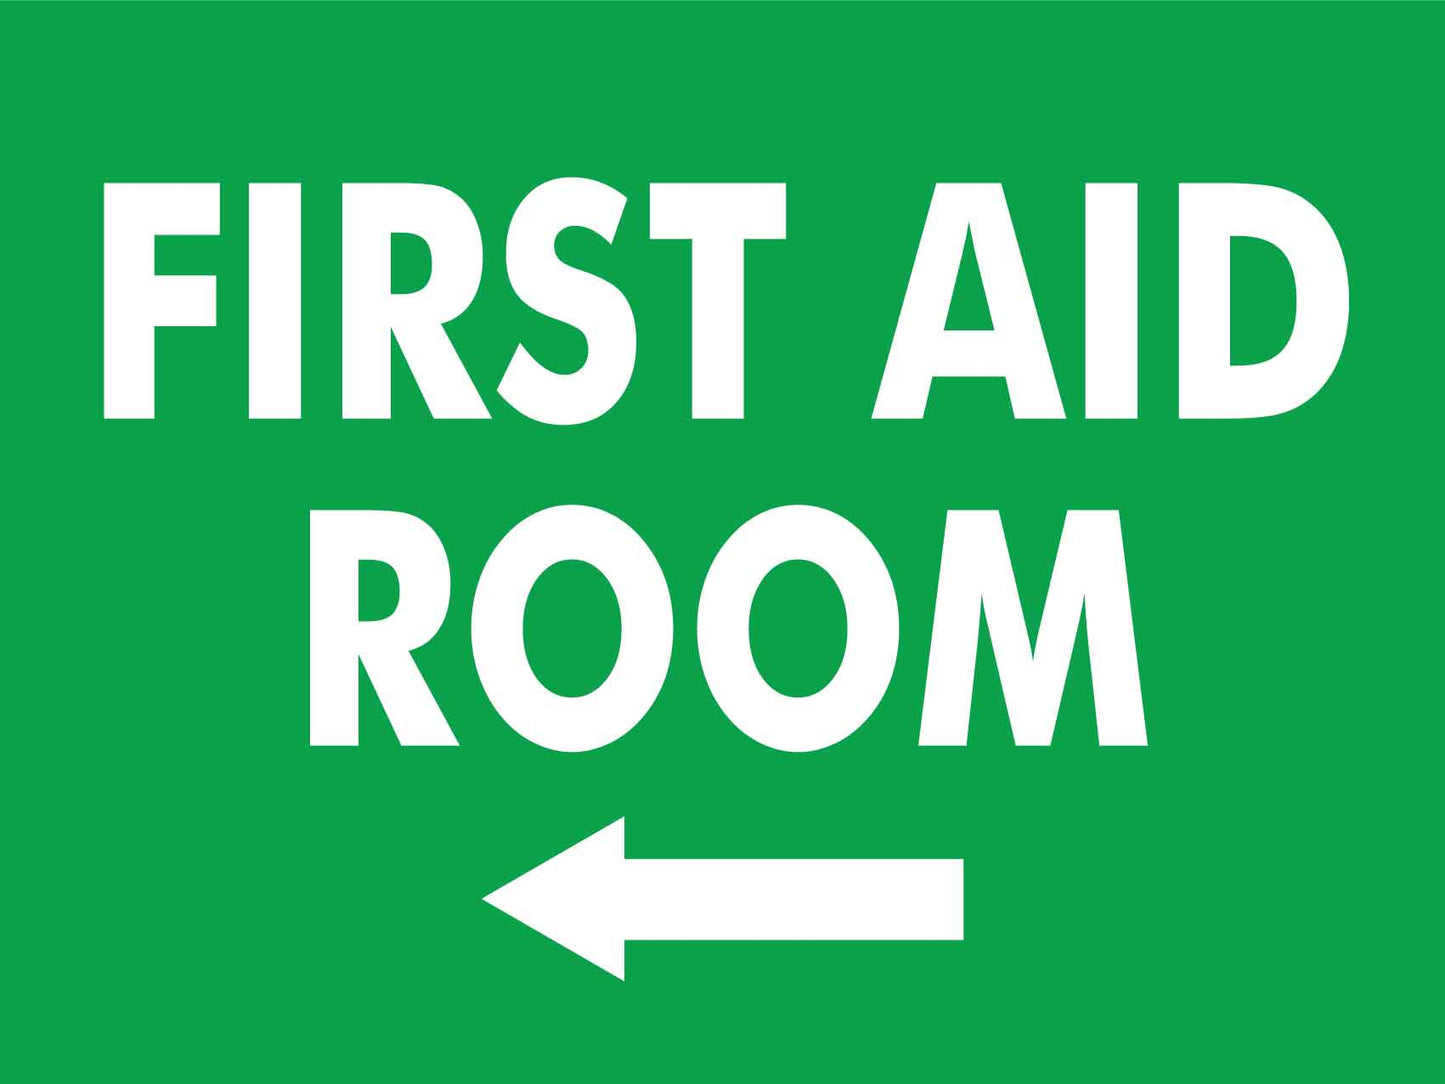 First Aid Room (Arrow Left) Sign